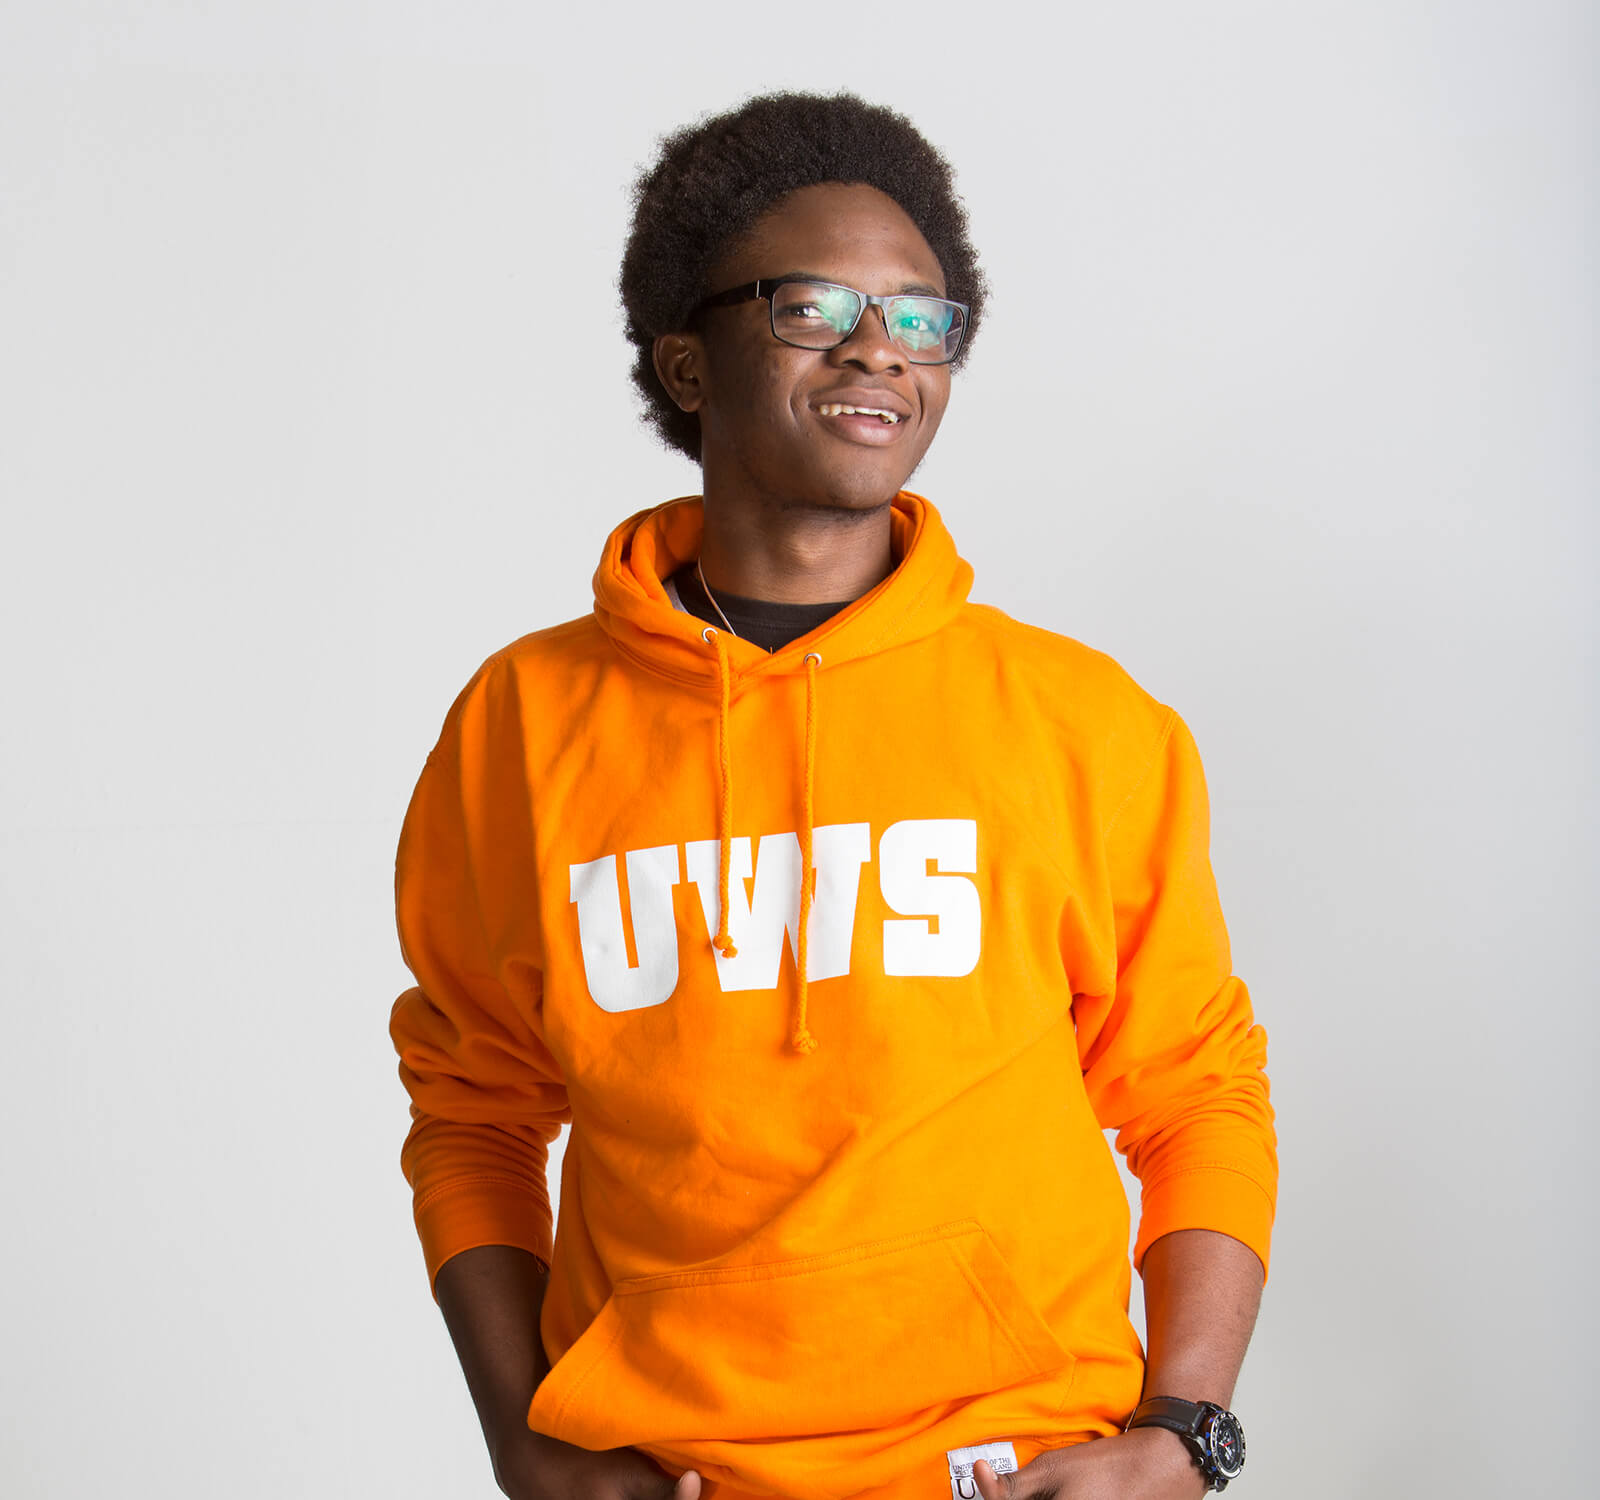 Student wearing orange UWS jumper